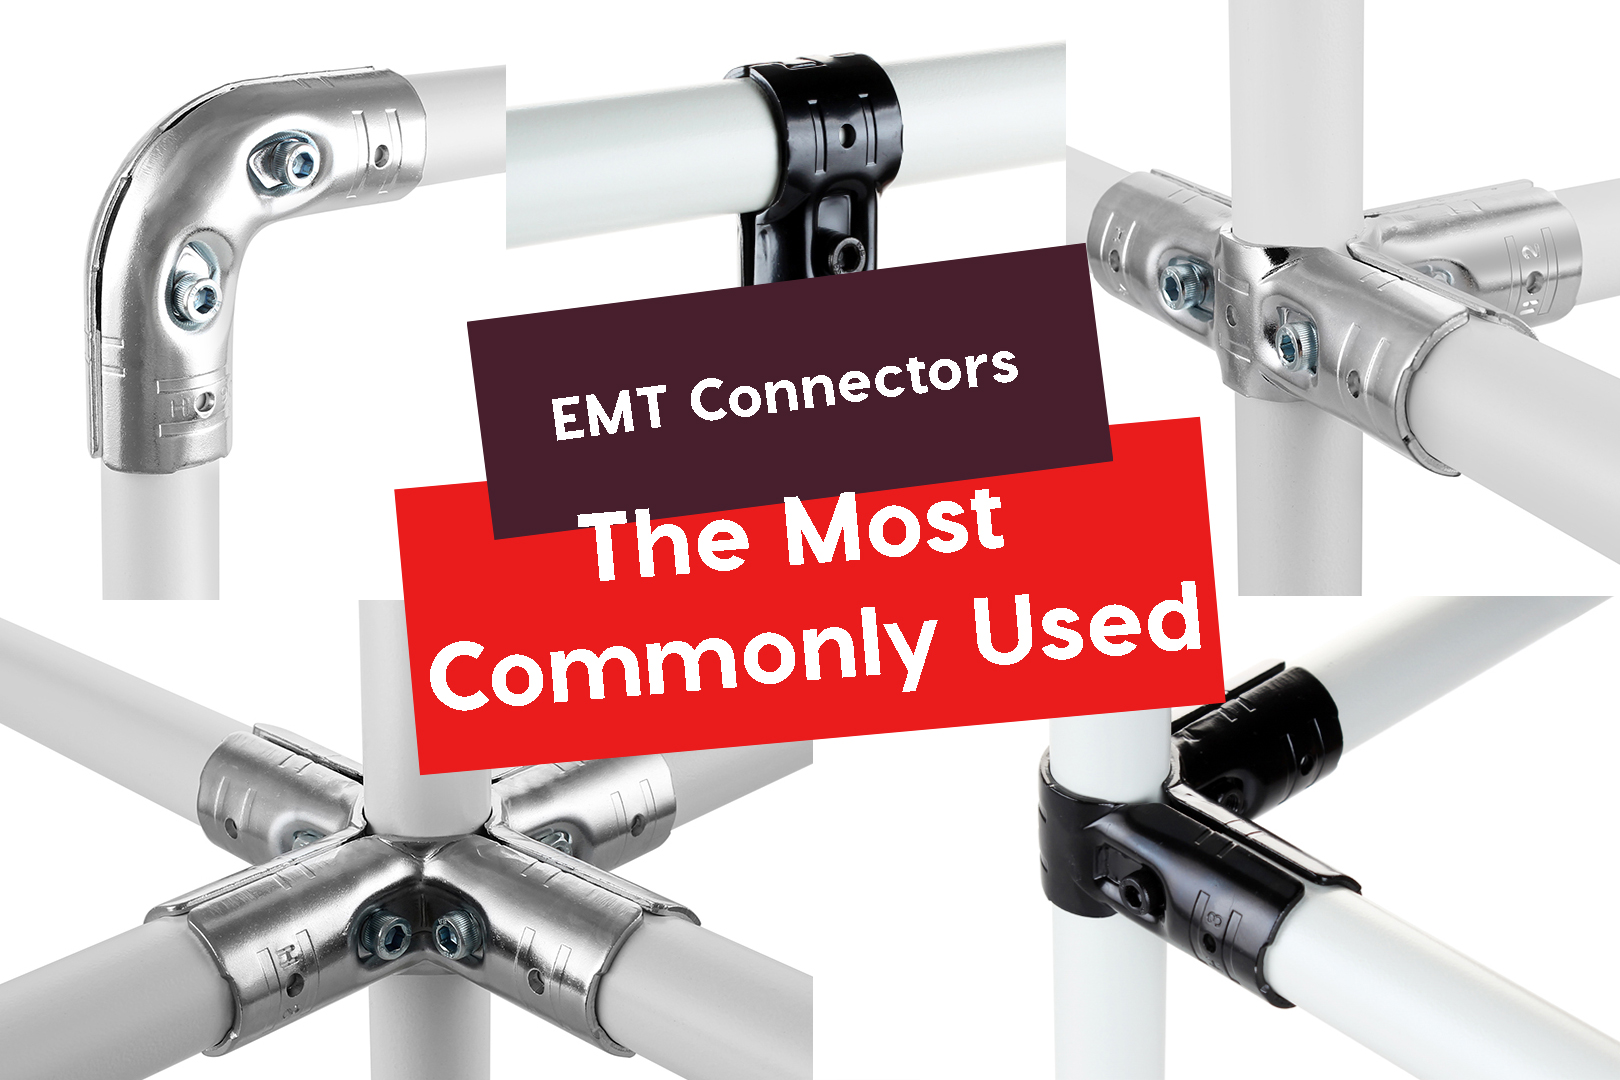 EMT connectors featured